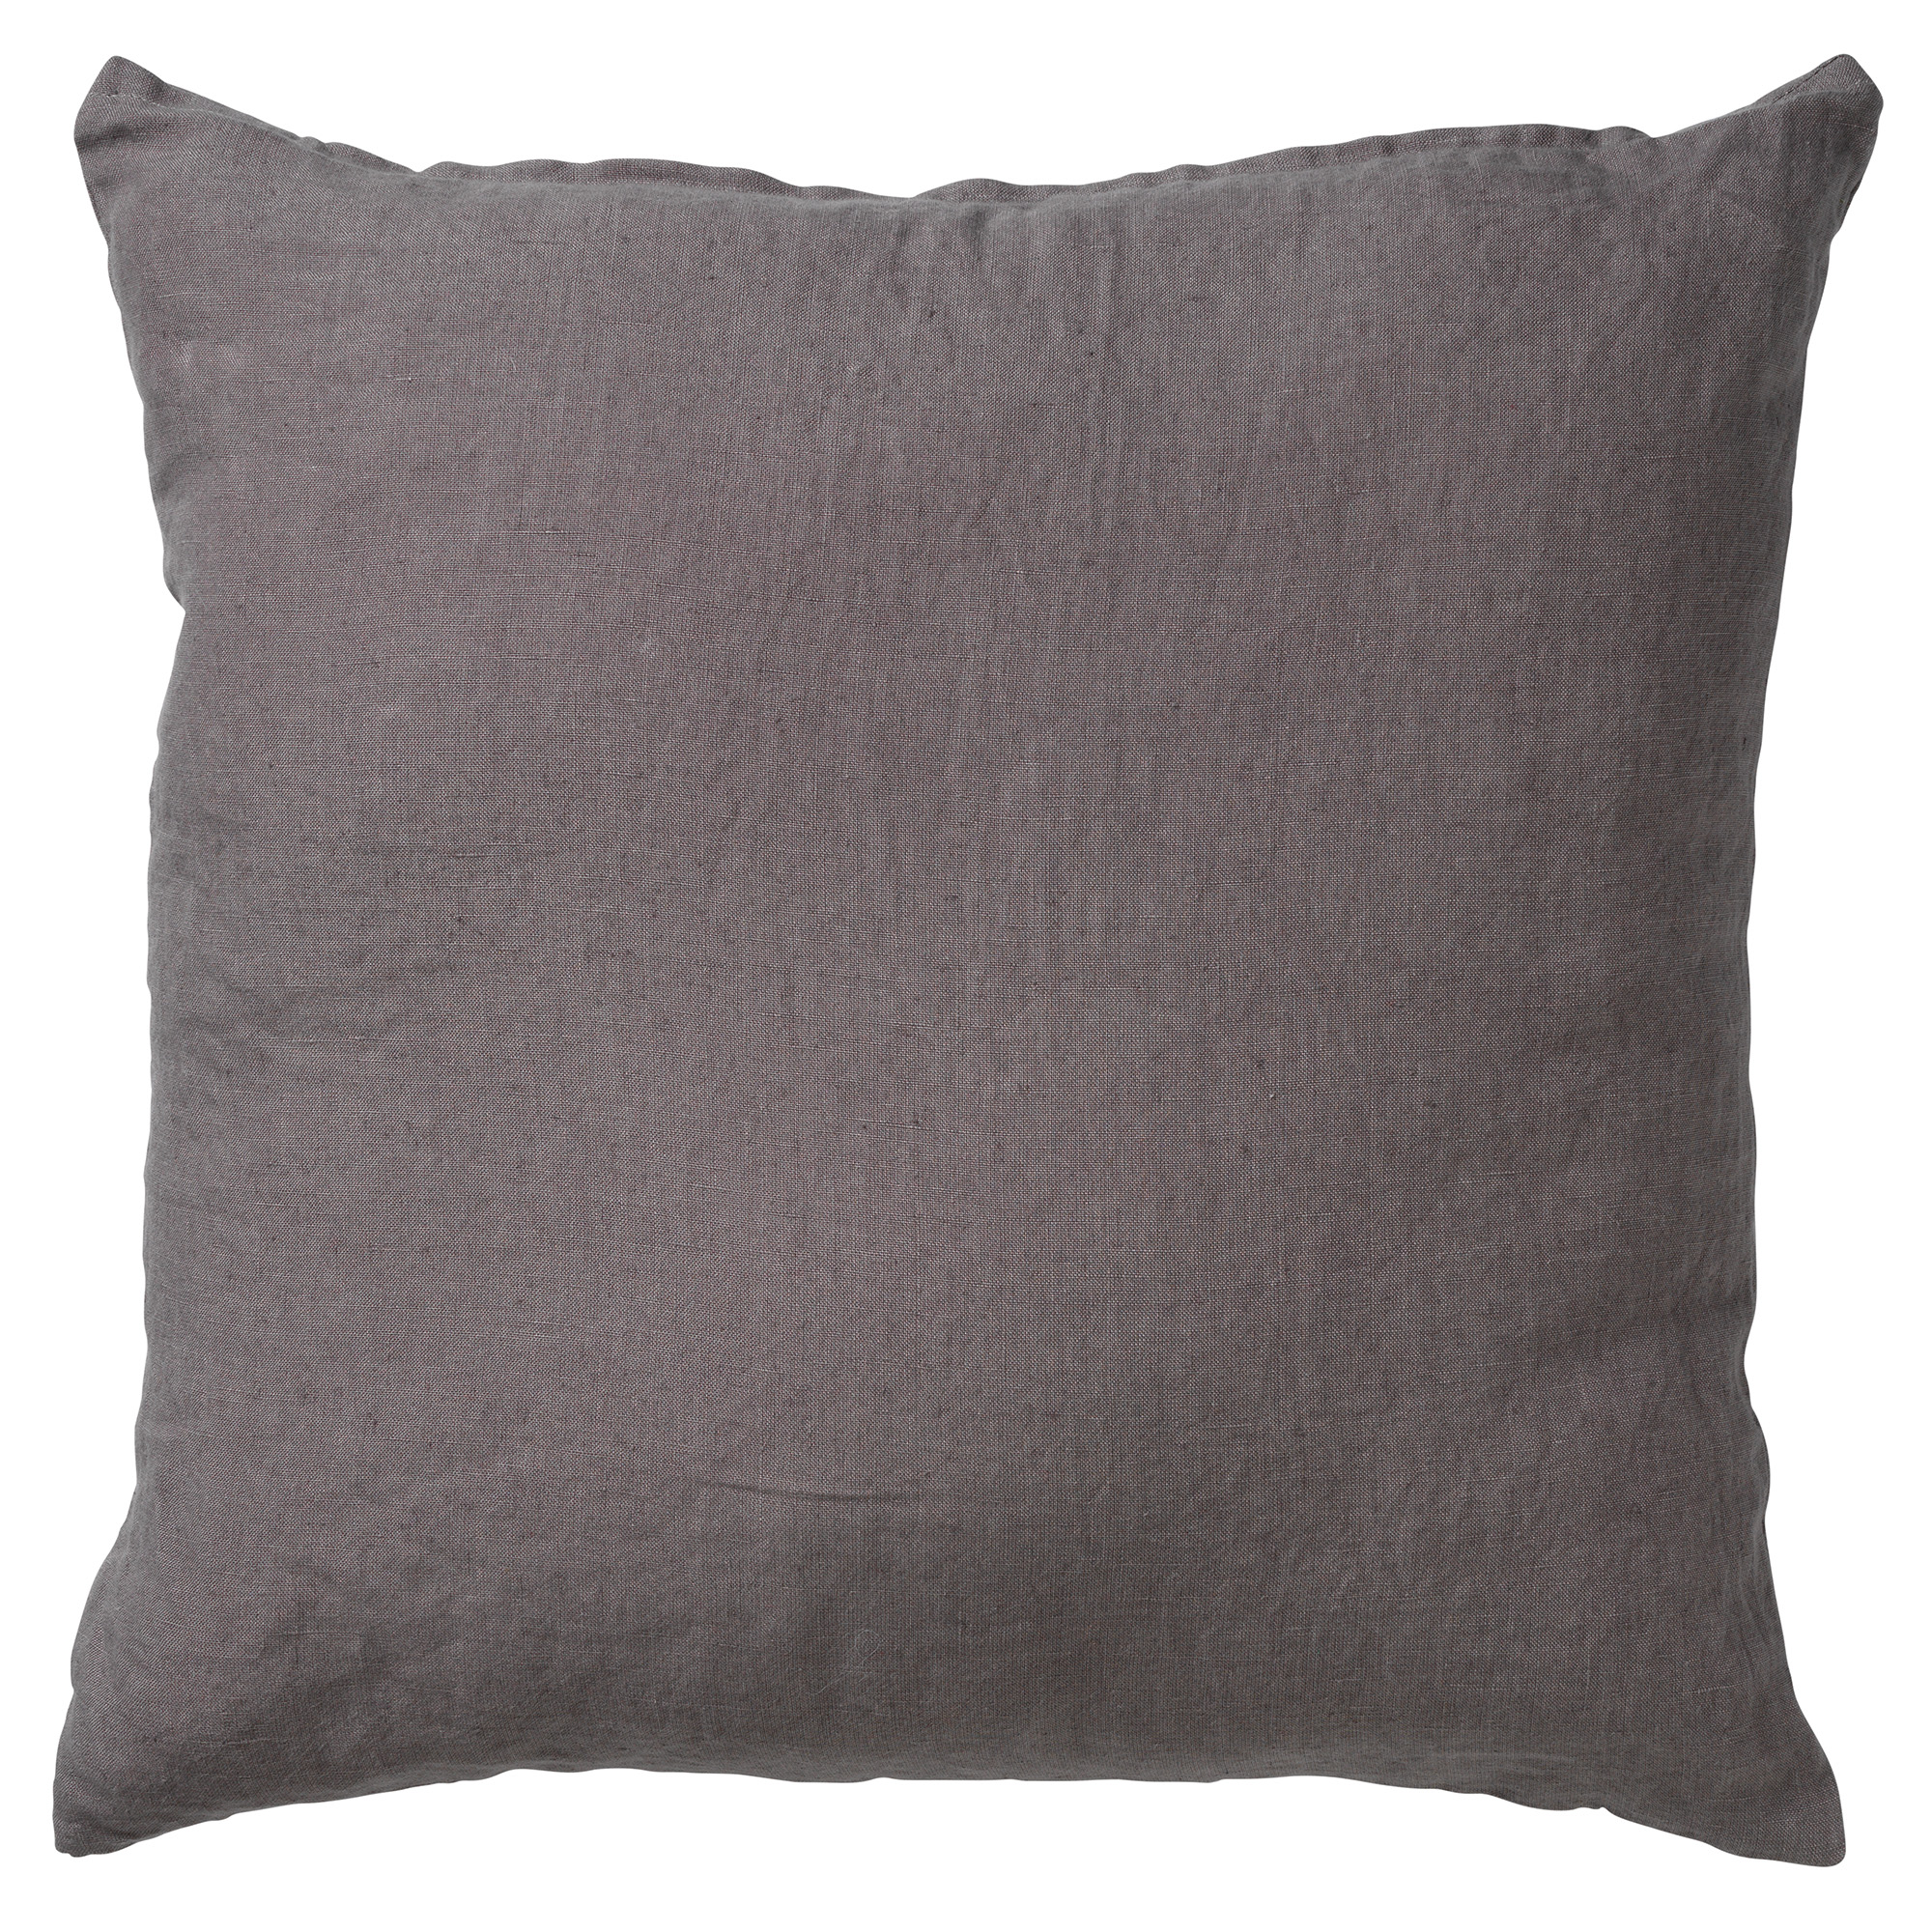 LINN - Kussenhoes 45x45 cm - 100% linnen - effen kleur - Charcoal Gray - antraciet